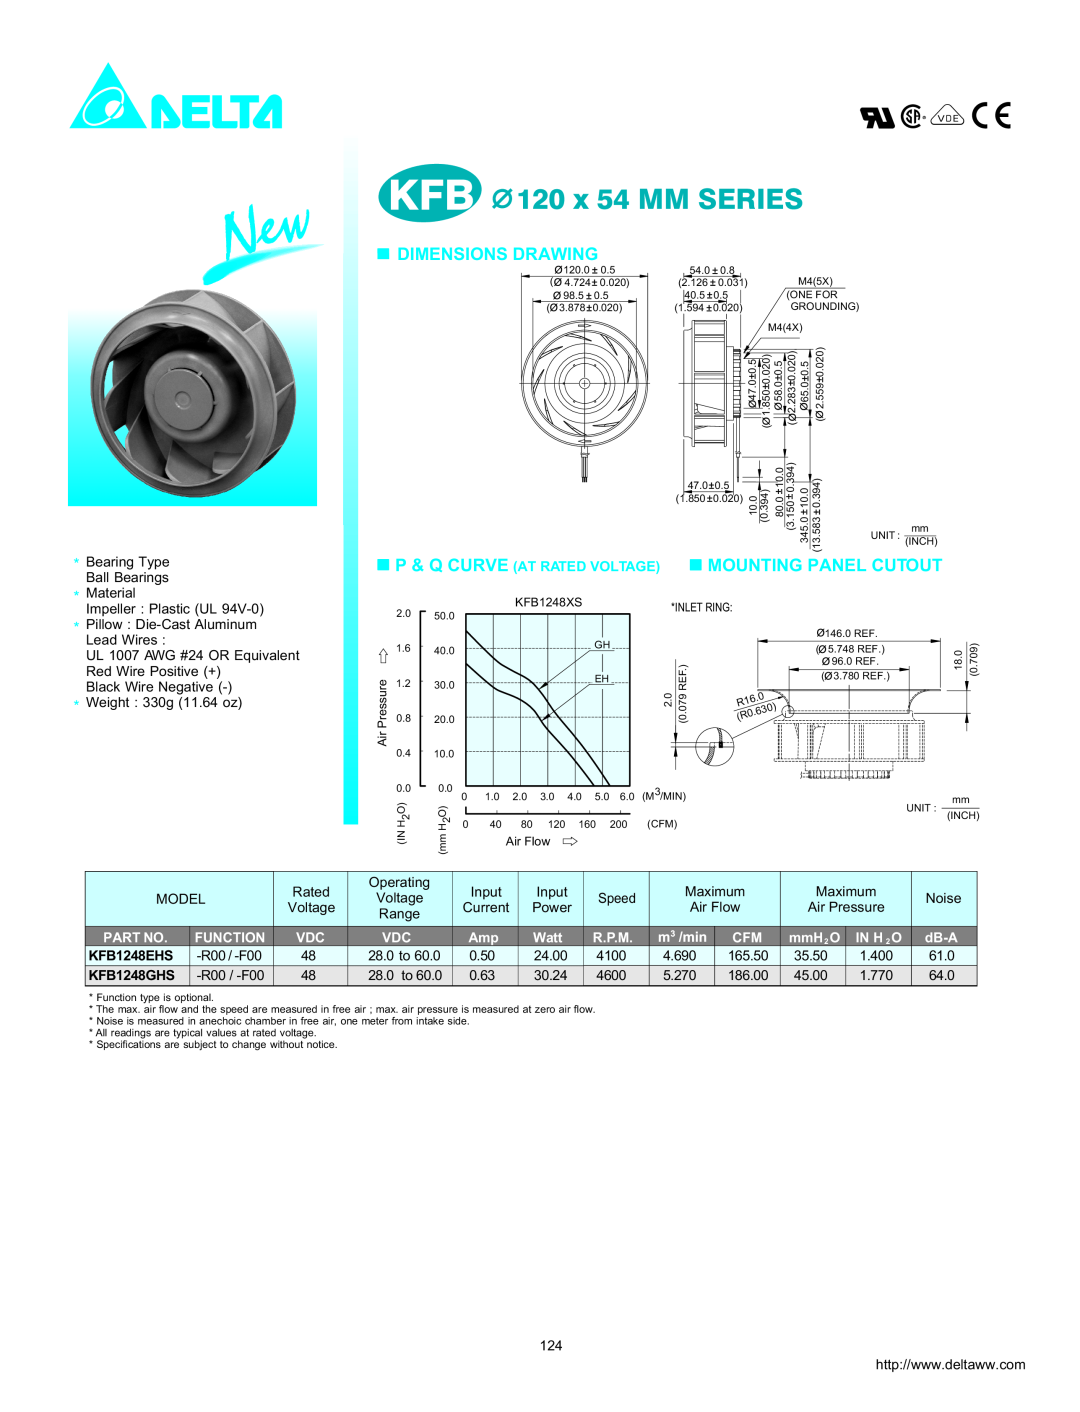 Delta Electronics KHB1248EHS dimensions KFB 120 x 54 MM SERIES, Dimensions Drawing, Mounting Panel Cutout, Function, Watt 